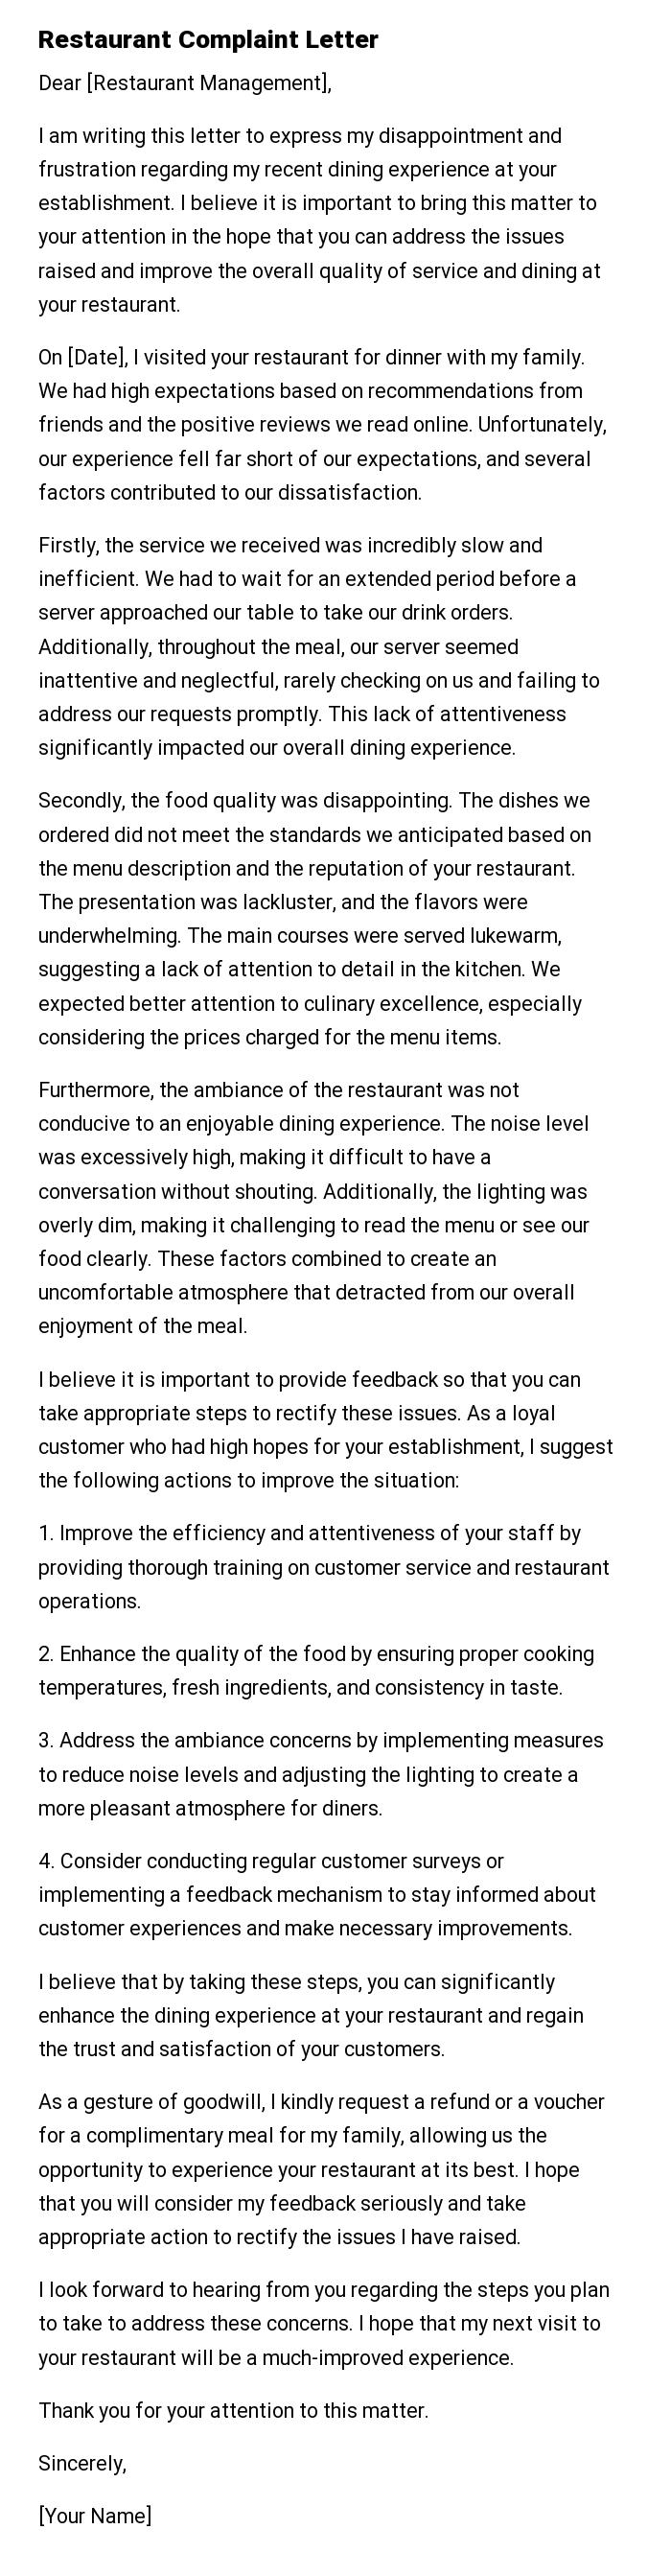 Restaurant Complaint Letter